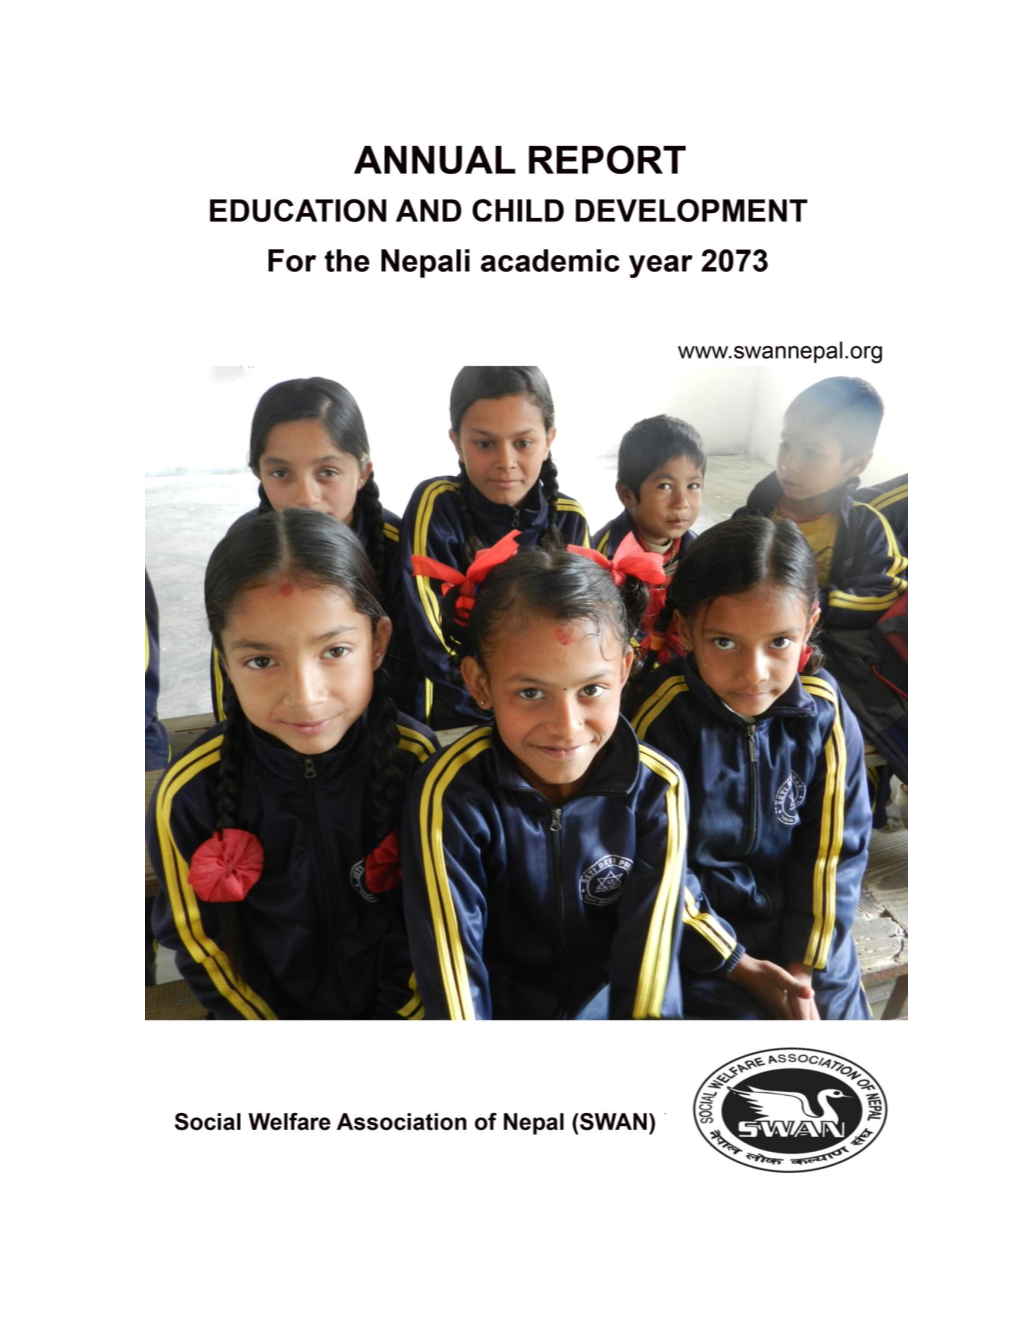 Education and Child Development